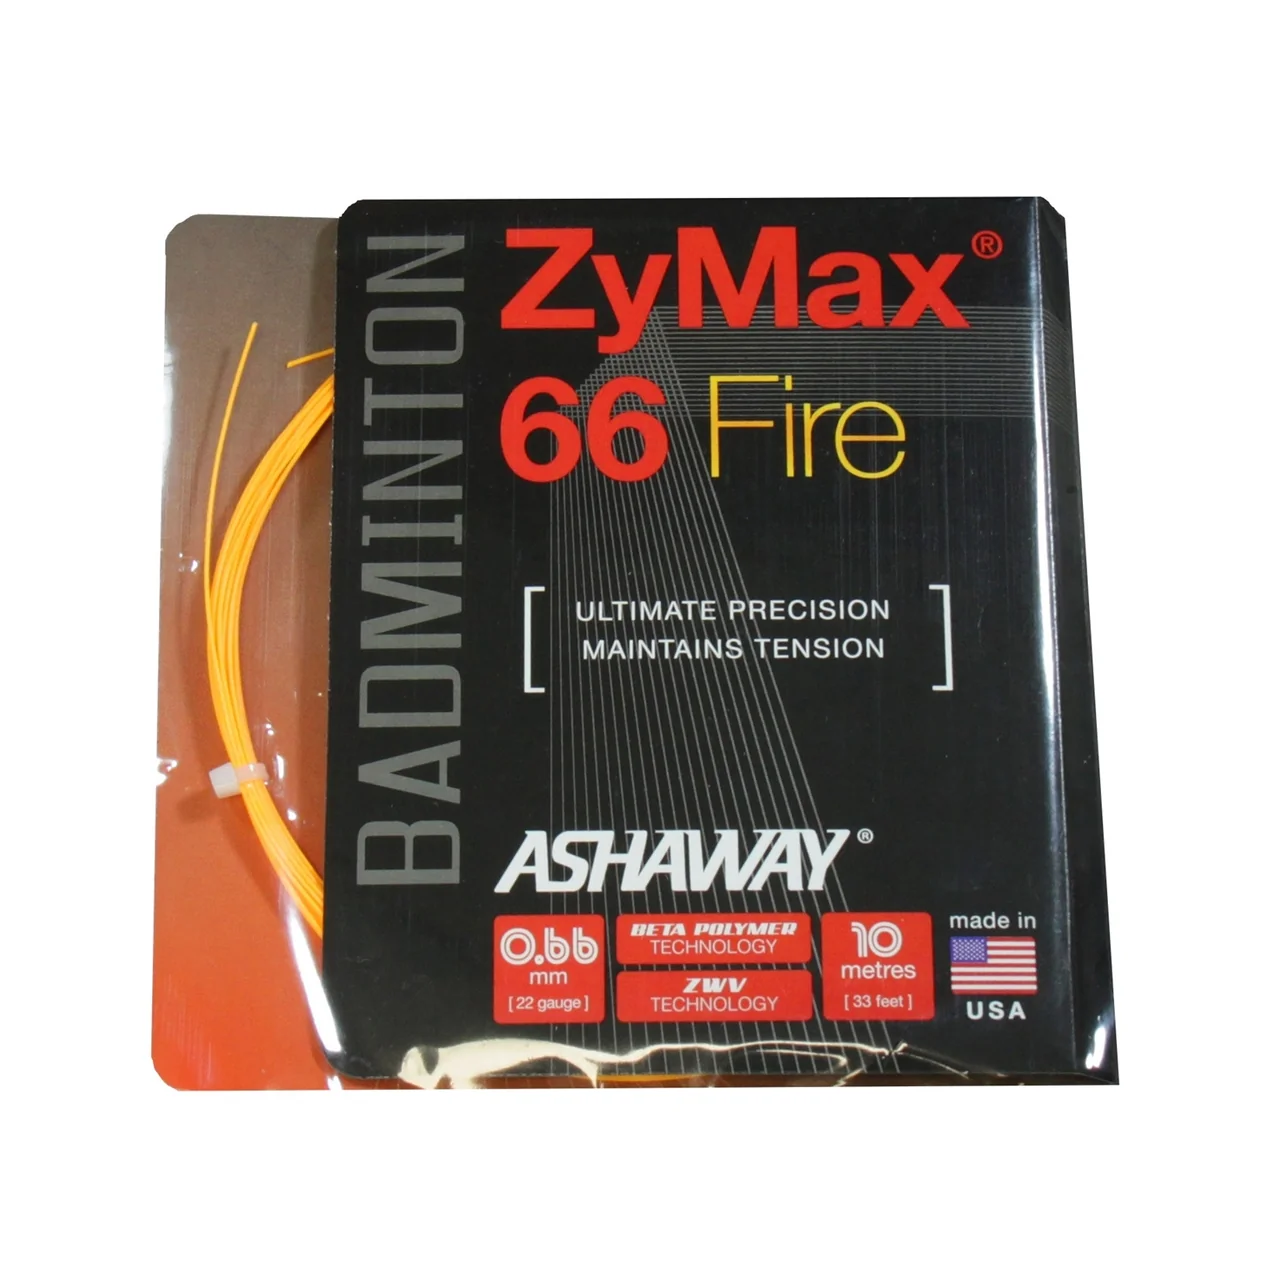 Ashaway Zymax 66 Fire Orange Set